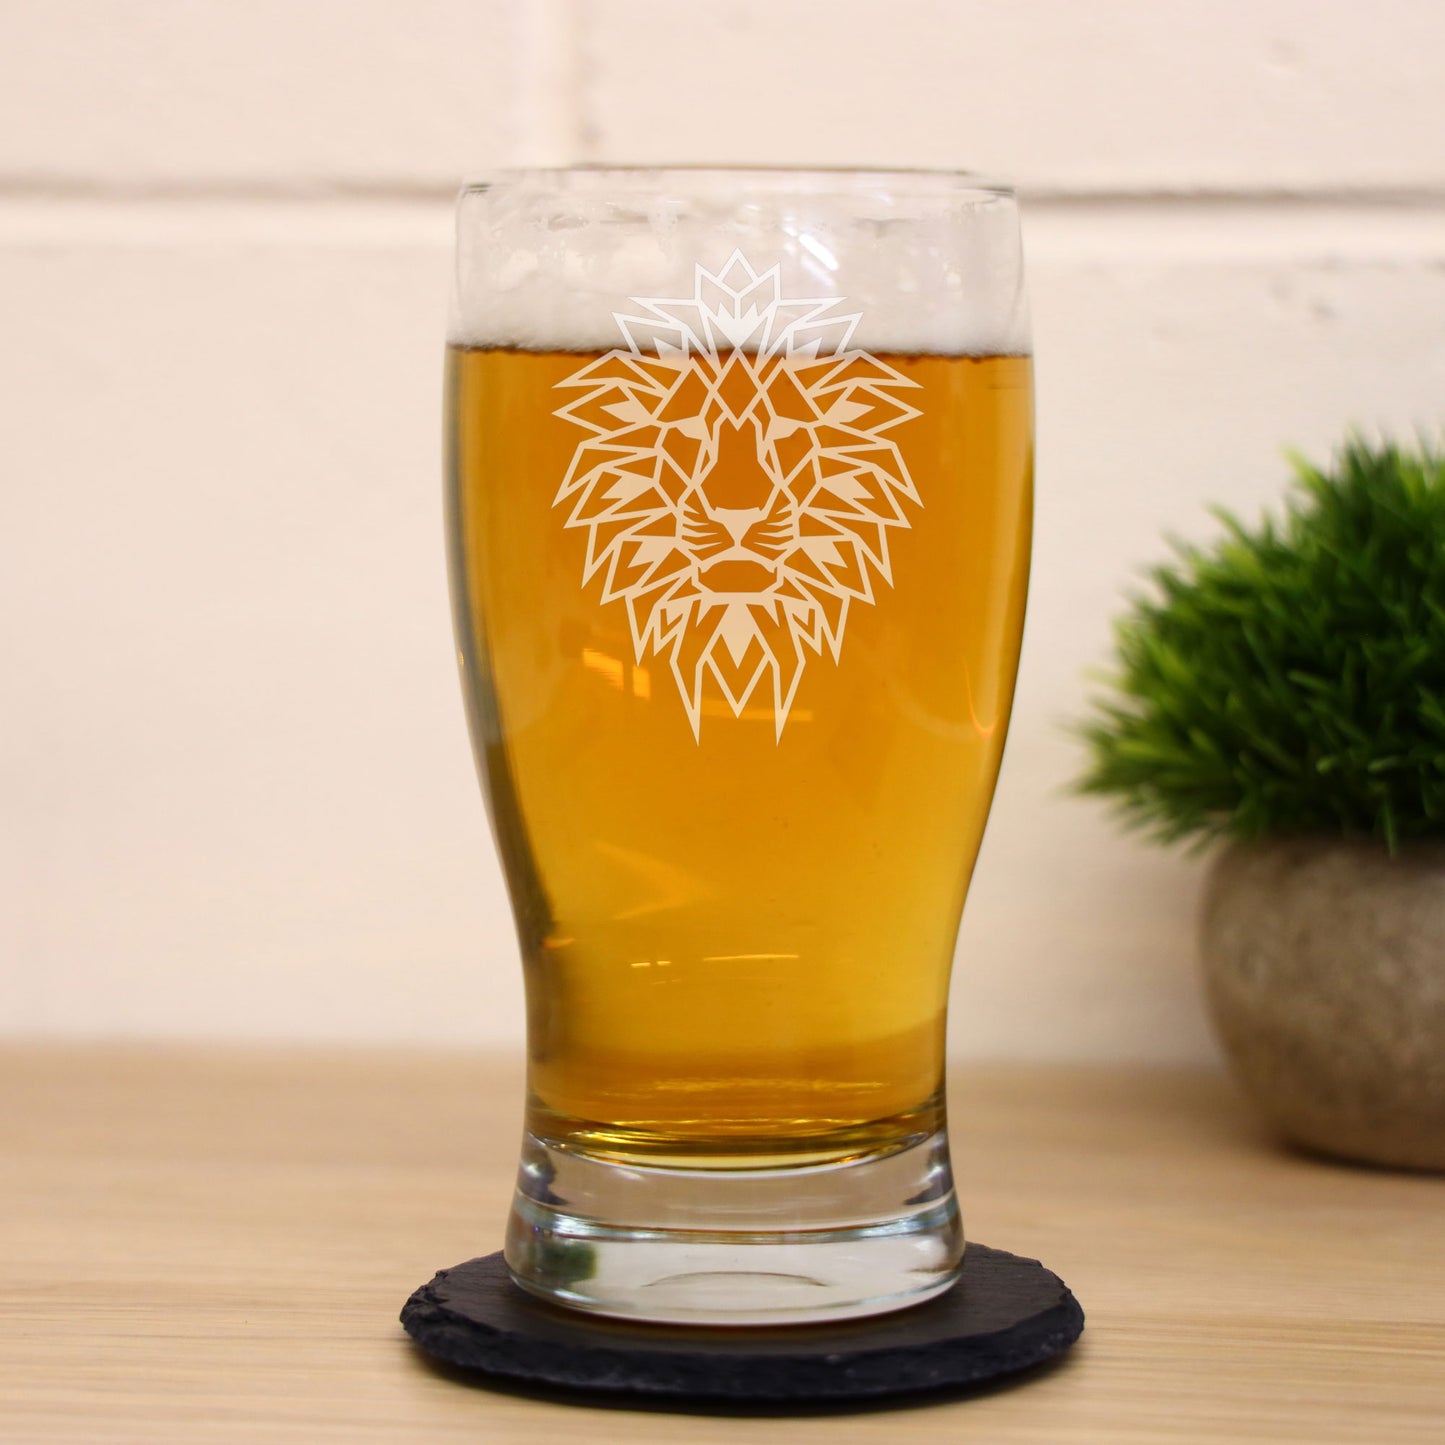 Lion Engraved Beer Pint Glass  - Always Looking Good -   